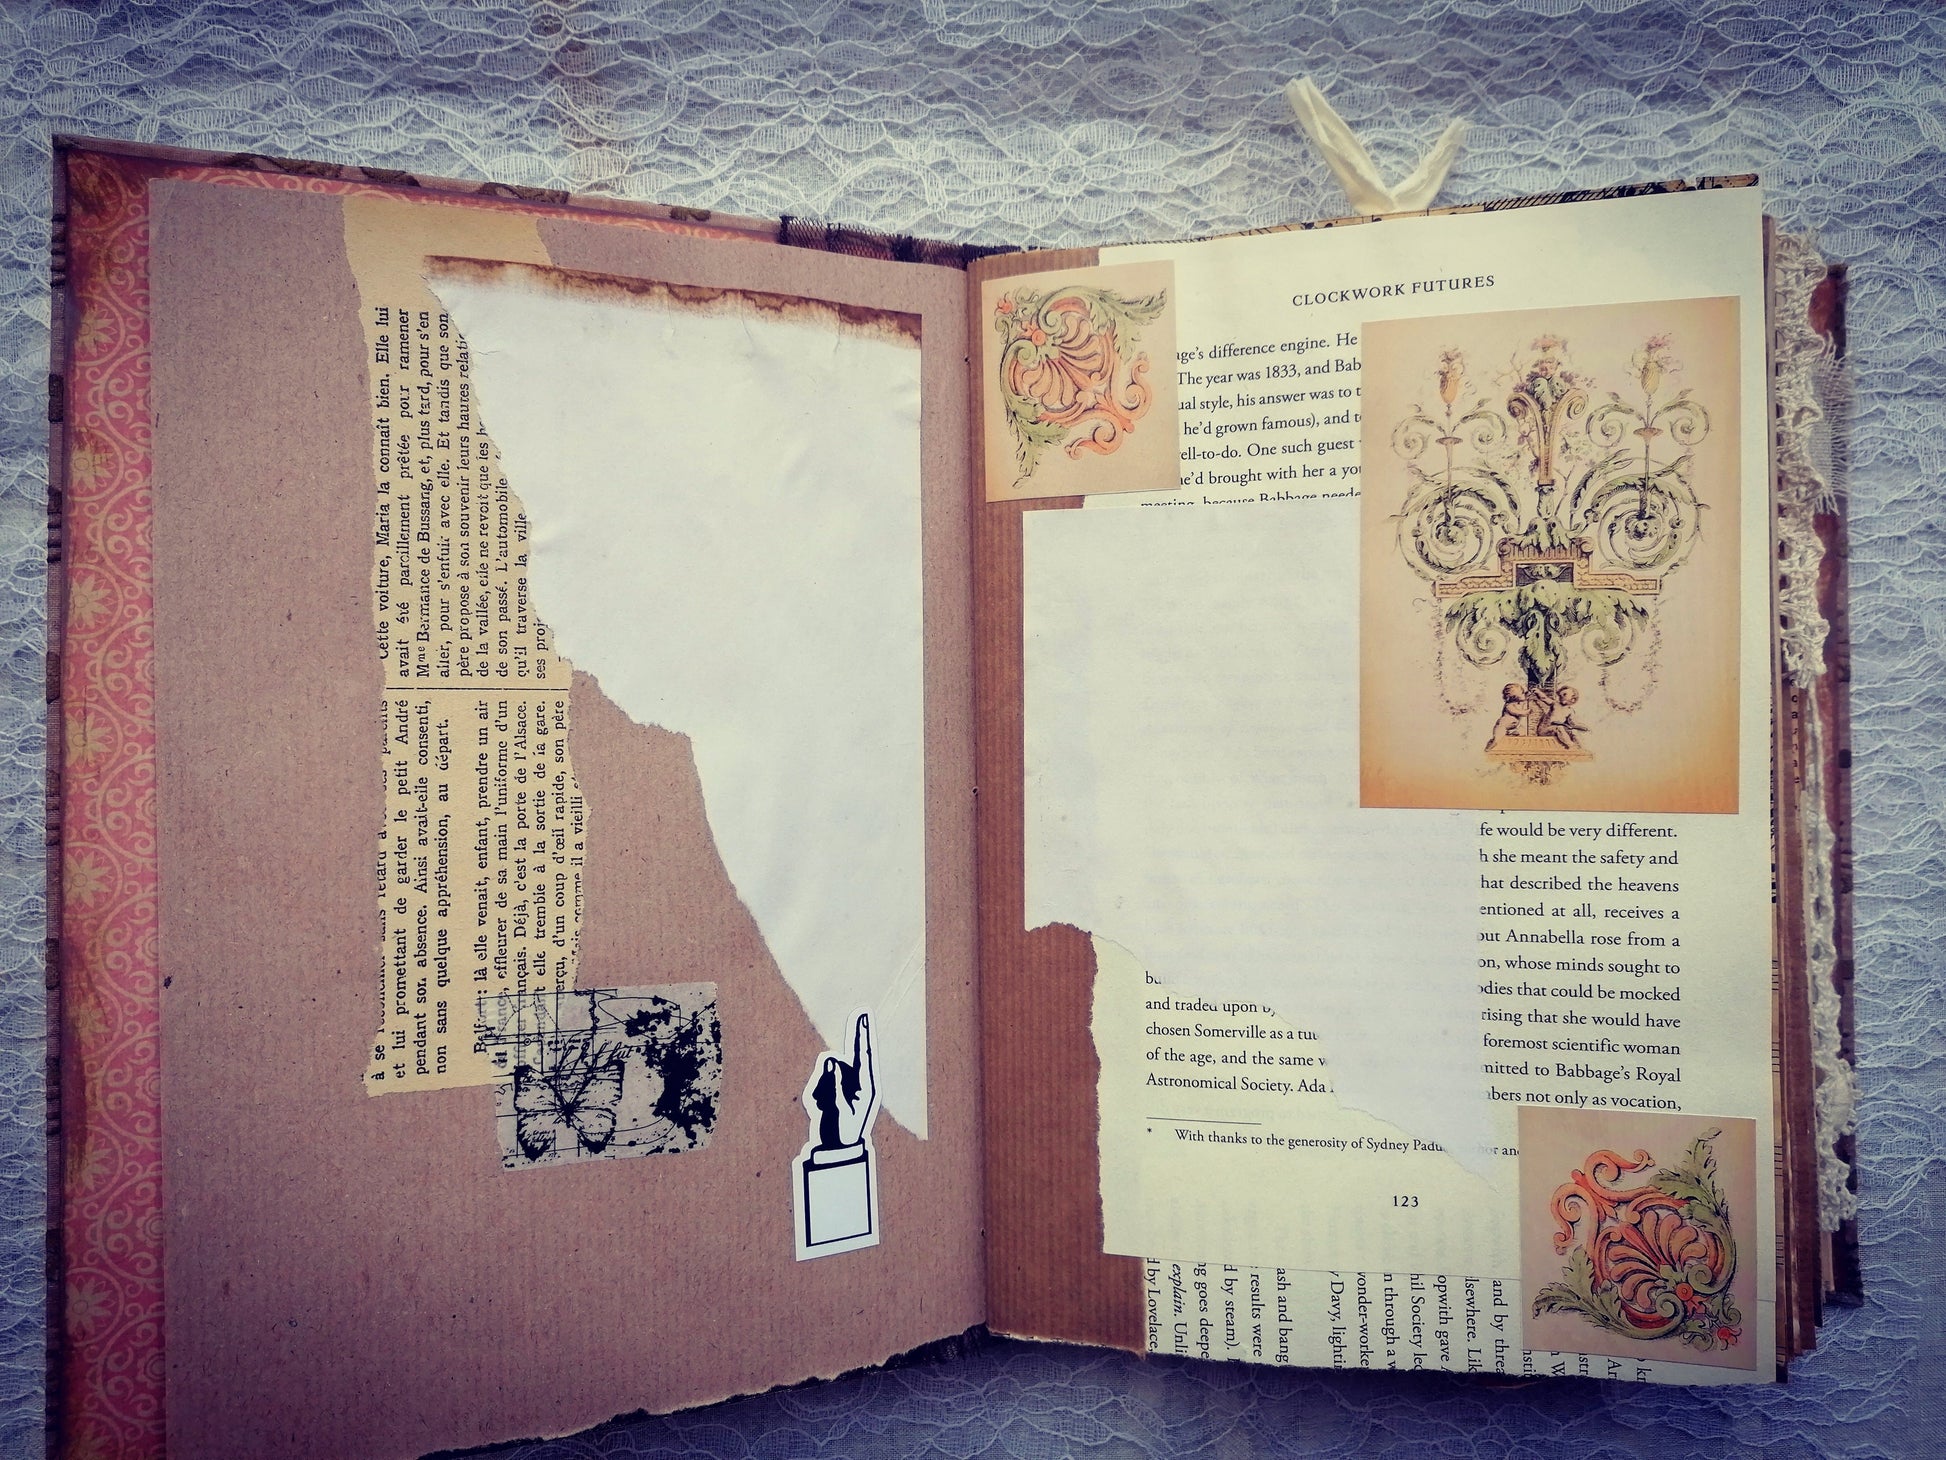 Jurnal Handmade Reciclat, Love Notes